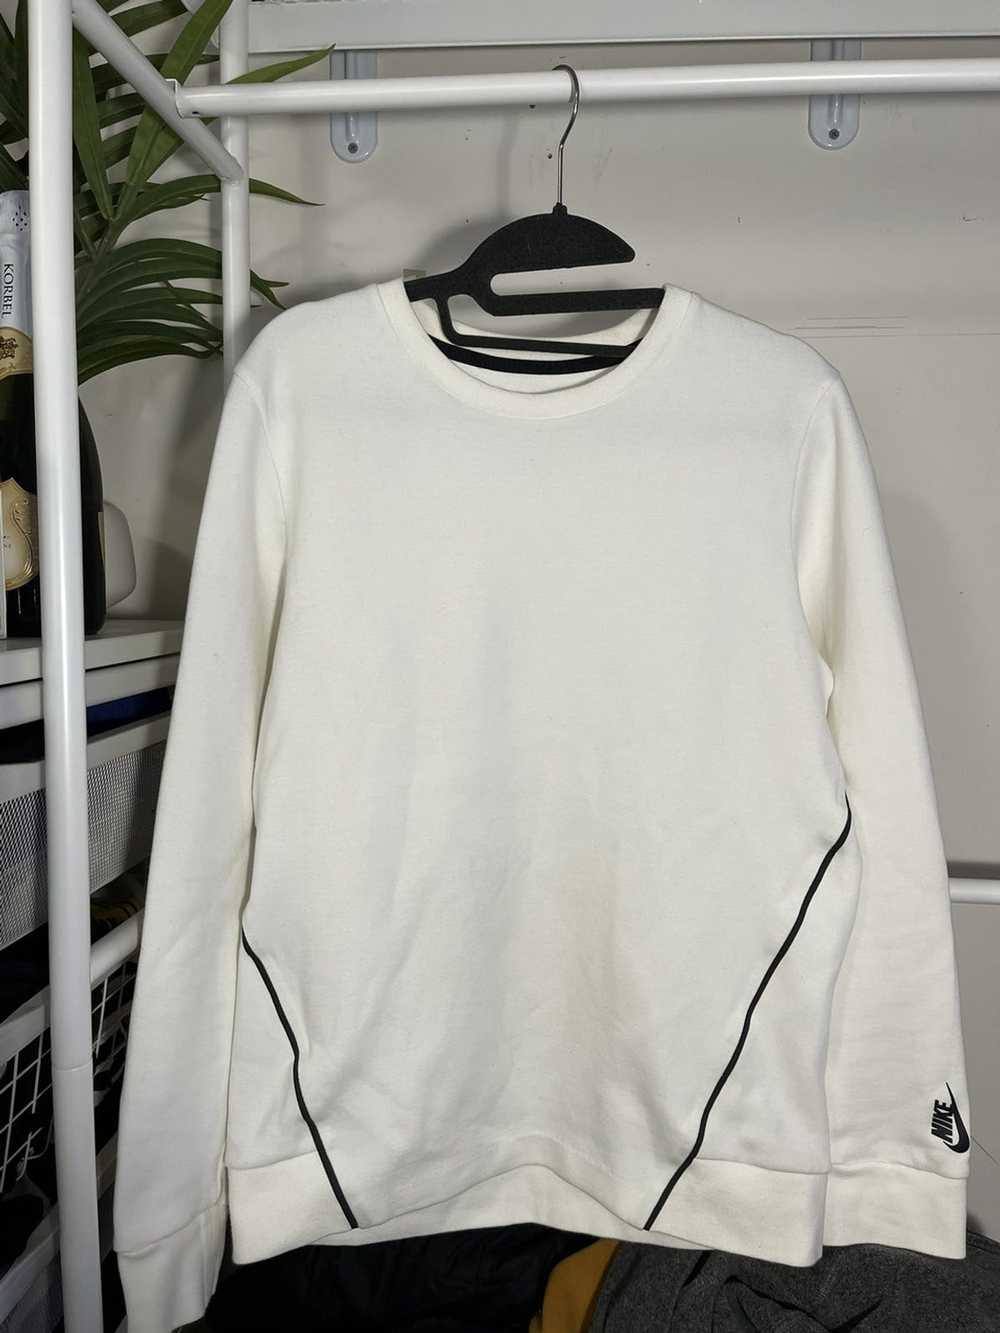 Nike Nike Lab White Crewneck Sweater - image 1